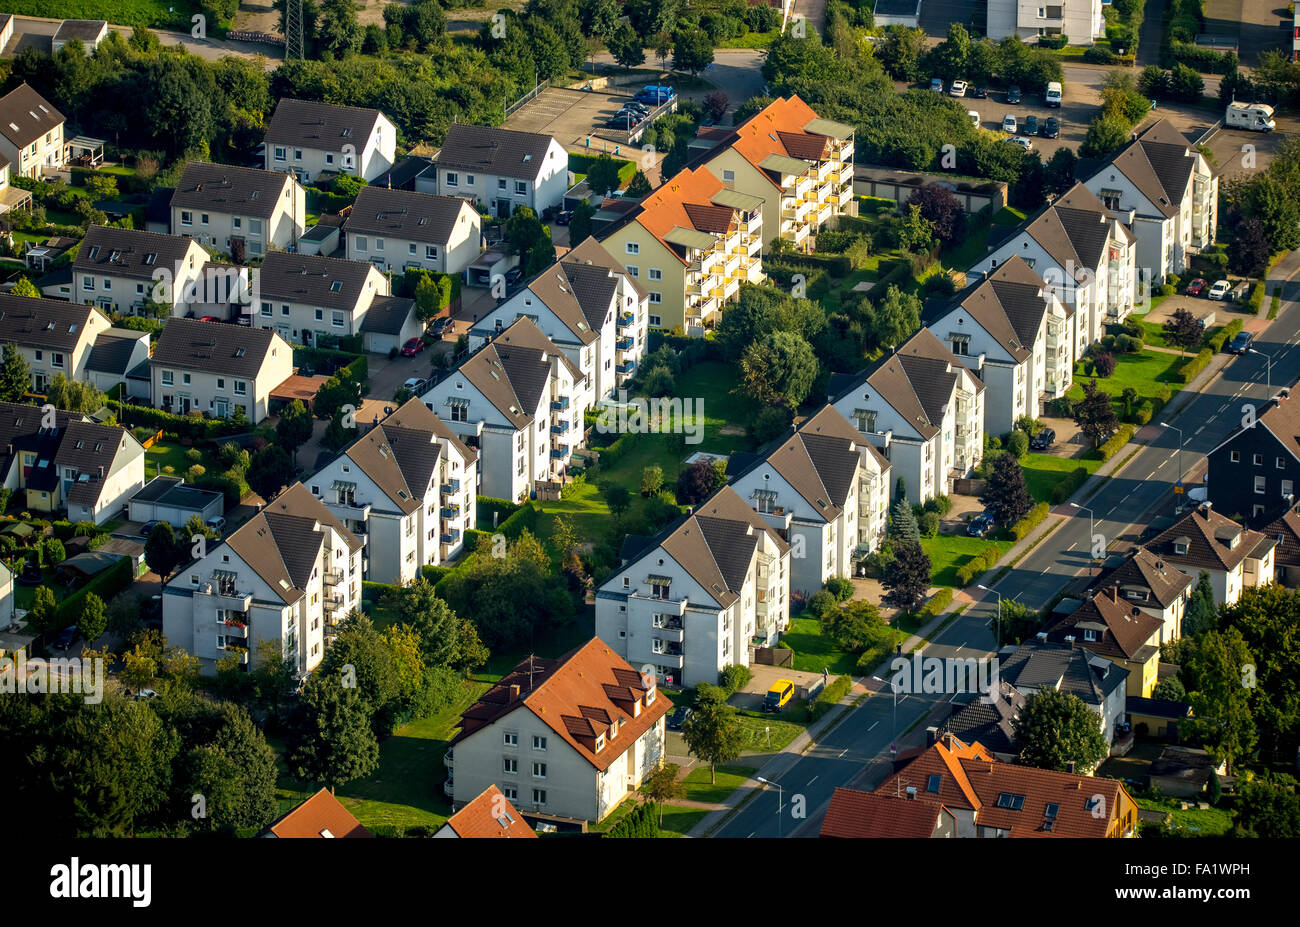 Blocks of flats, apartments, rent, Haßlinghausen, Sprockhövel, Ruhr region, North Rhine Westphalia, Germany, Europe, Aerial view Stock Photo